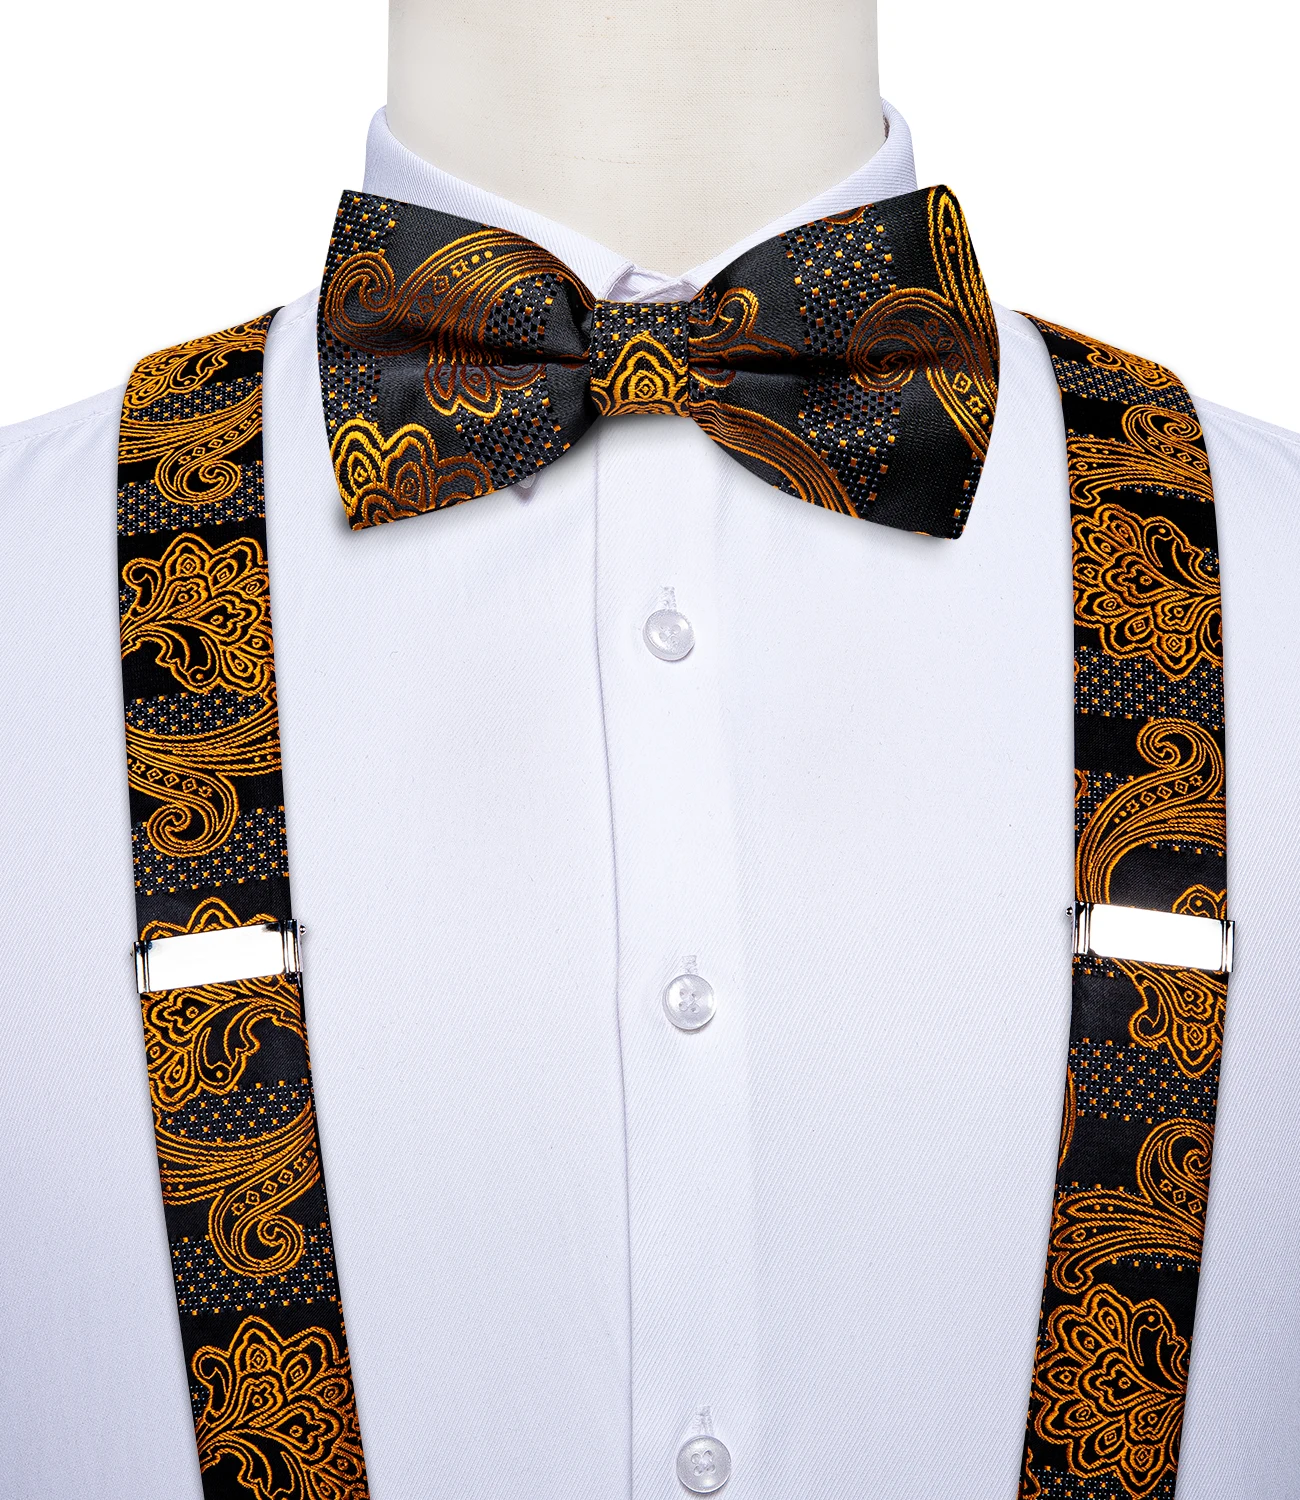 DiBanGu Men's Bow Tie Ascot Cravat Suspenders Braces Cummerbund Hanky Cufflinks 